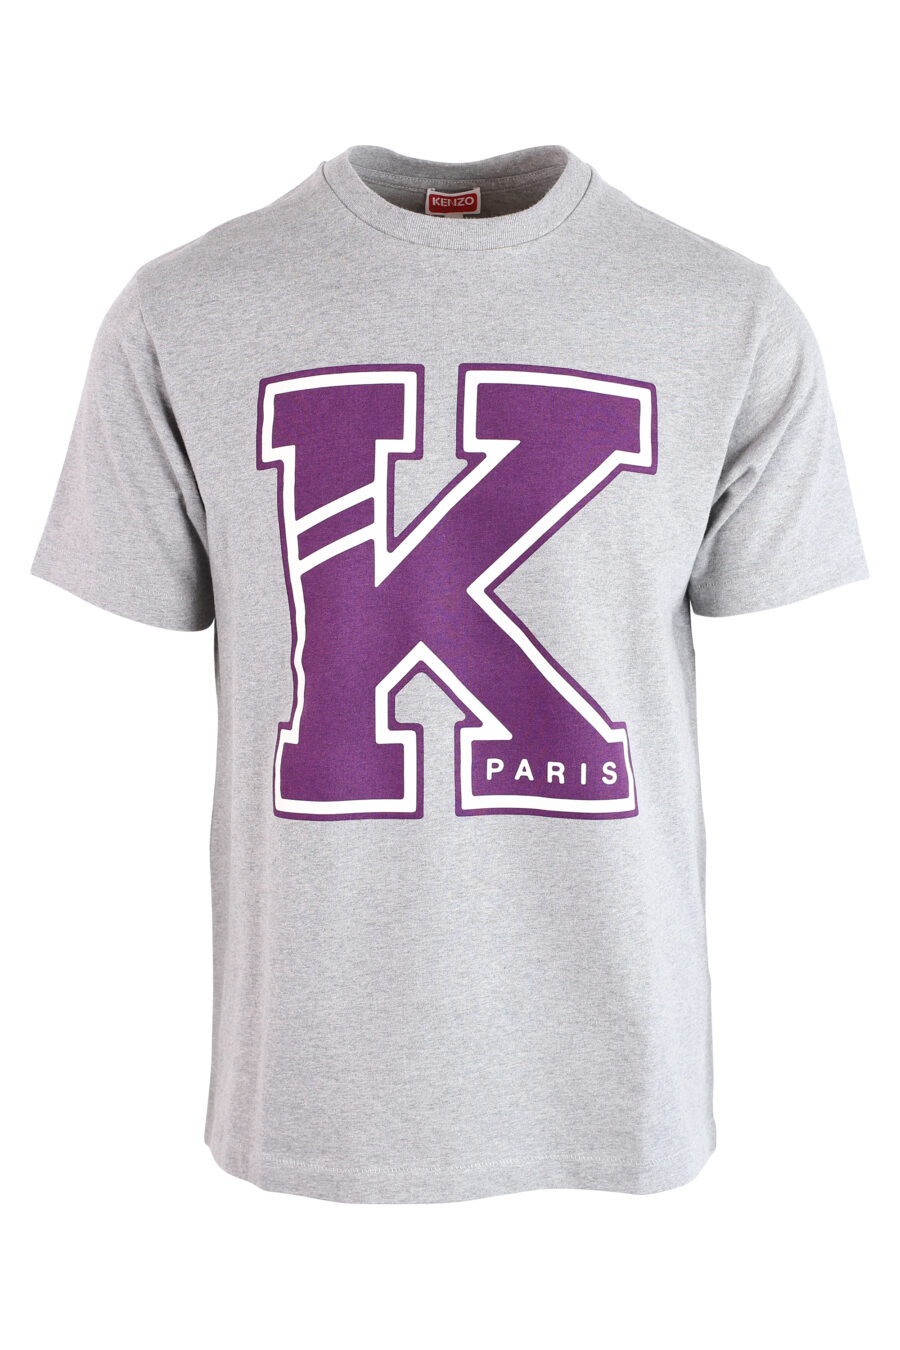 Grey T-shirt with violet "K" maxillogram - IMG 3195